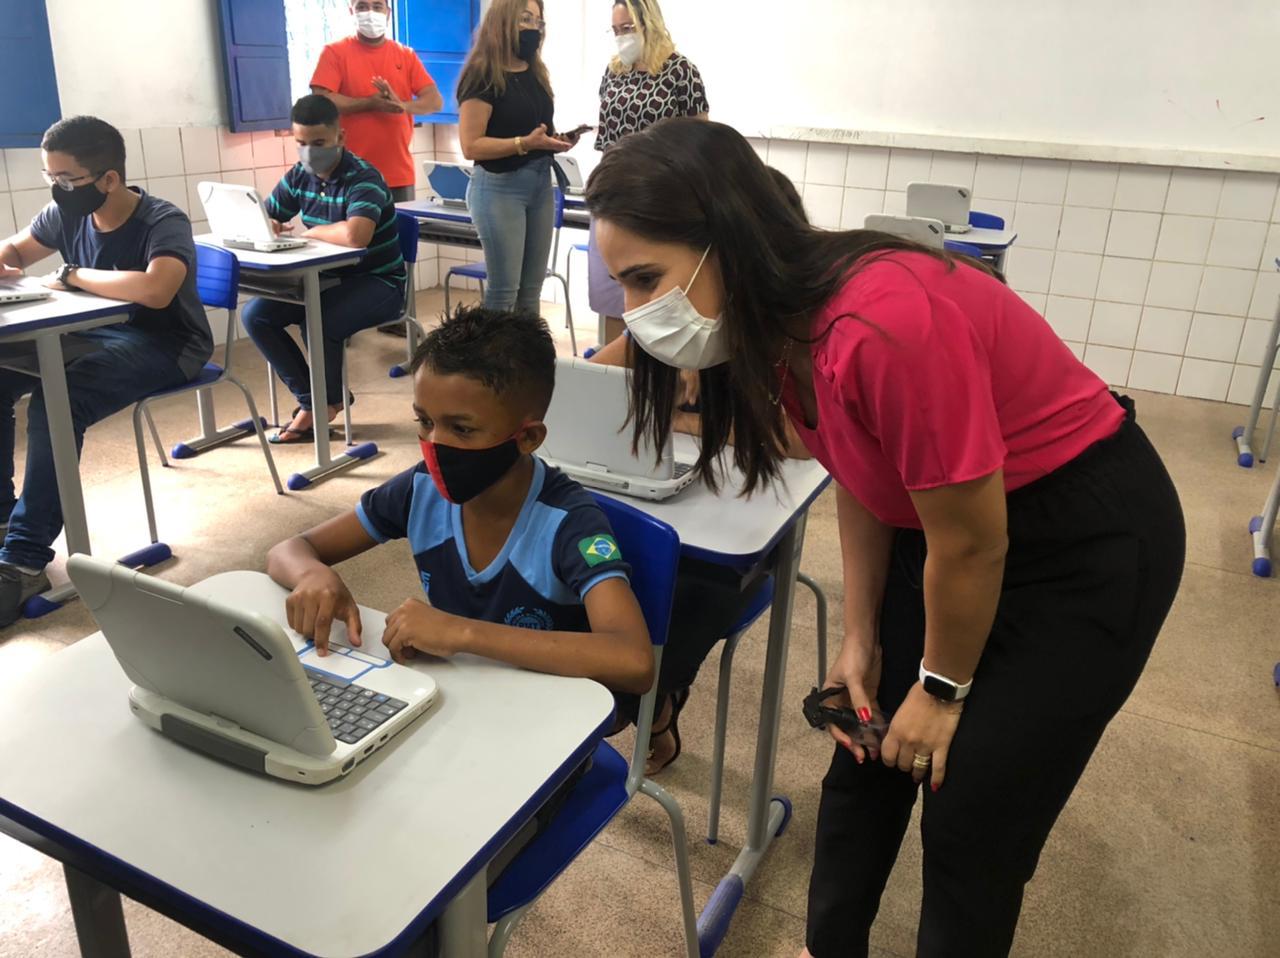 Vereadora Elzuila Calisto (PT), durante visita à Unidade Escolar Santa Filomena